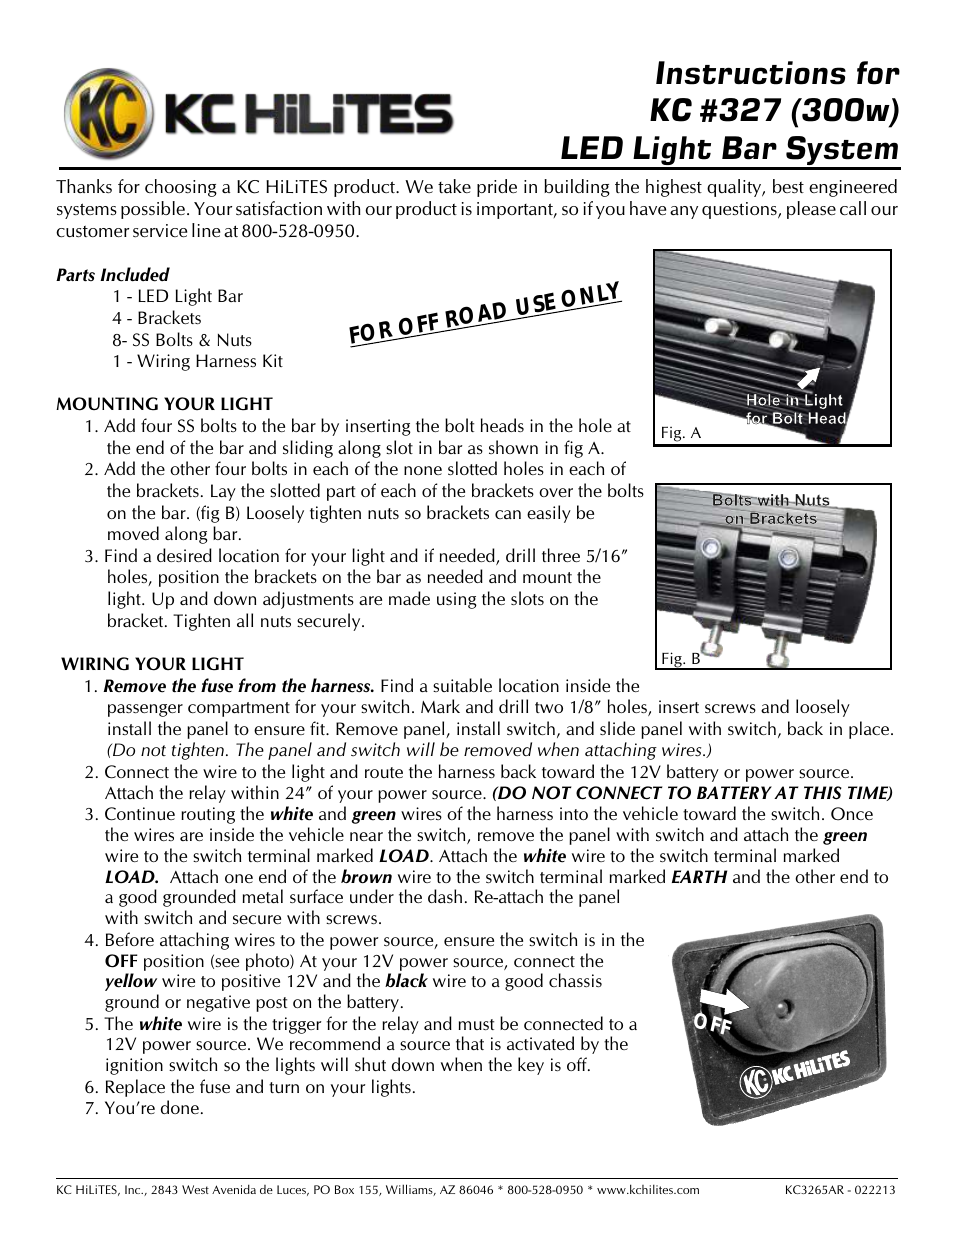 KC #327 (300w) LED Light Bar System Instructions